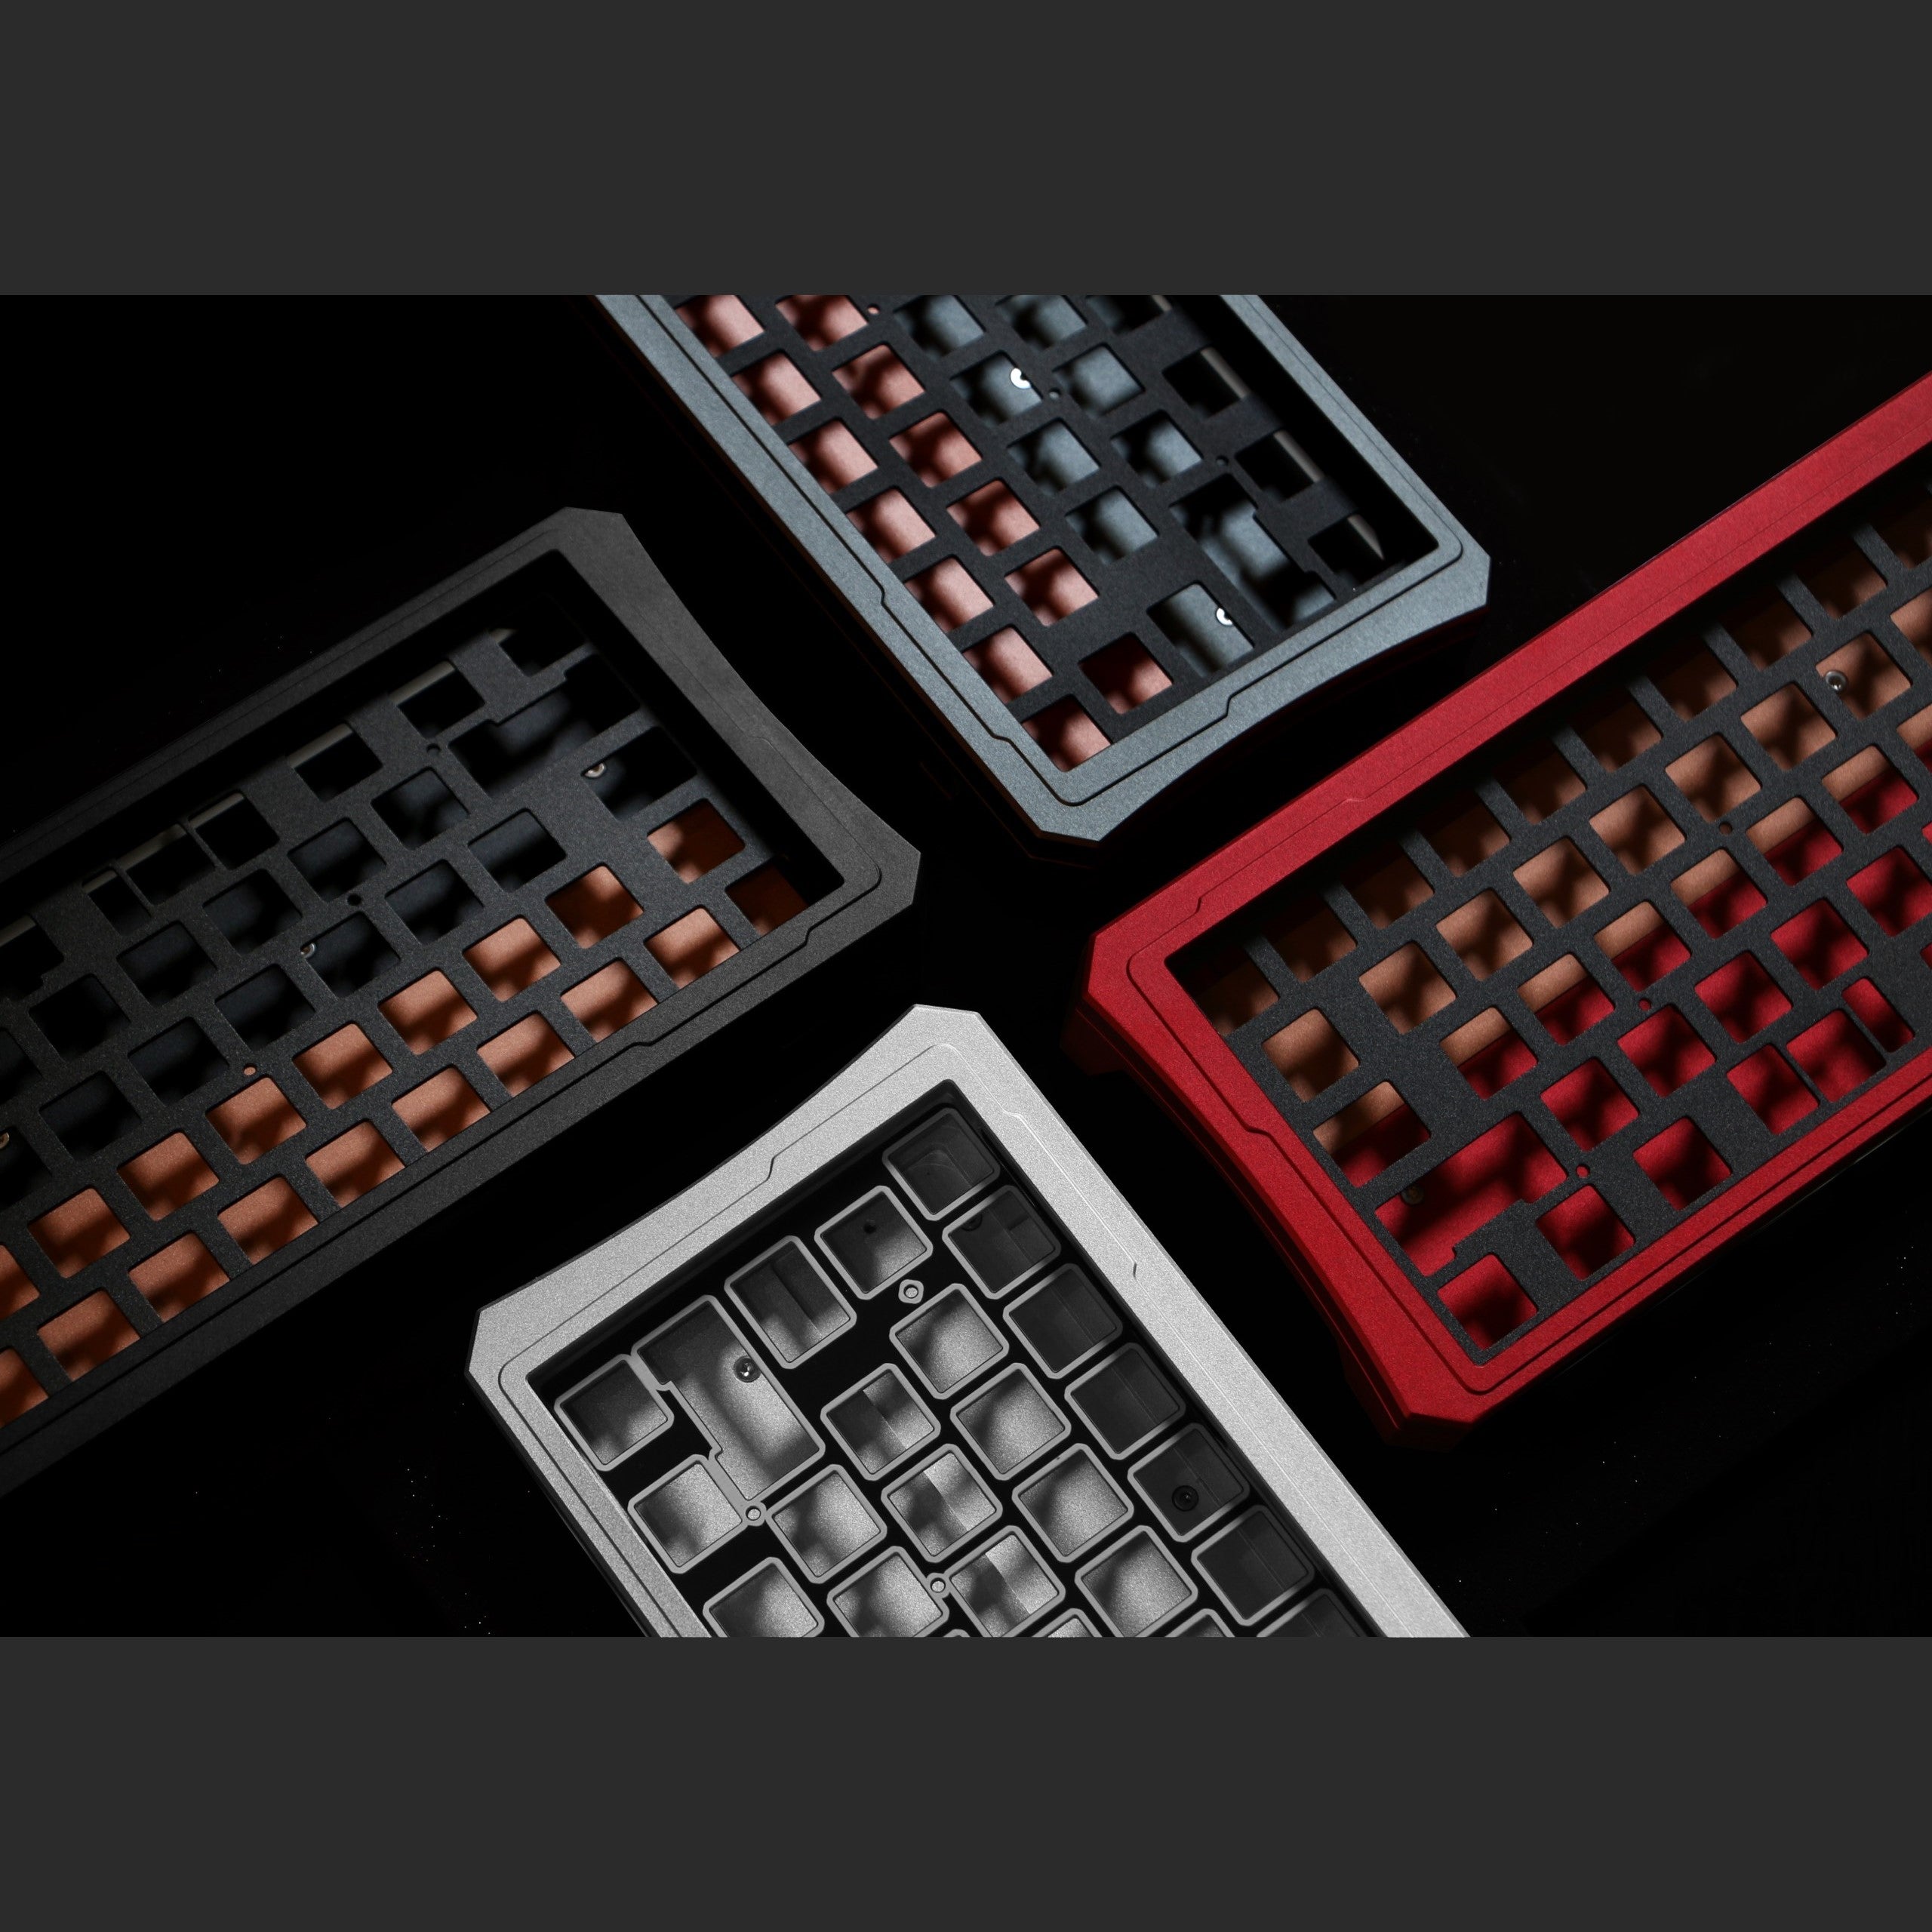 Group-Buy RE65 R2 Keyboard Kit